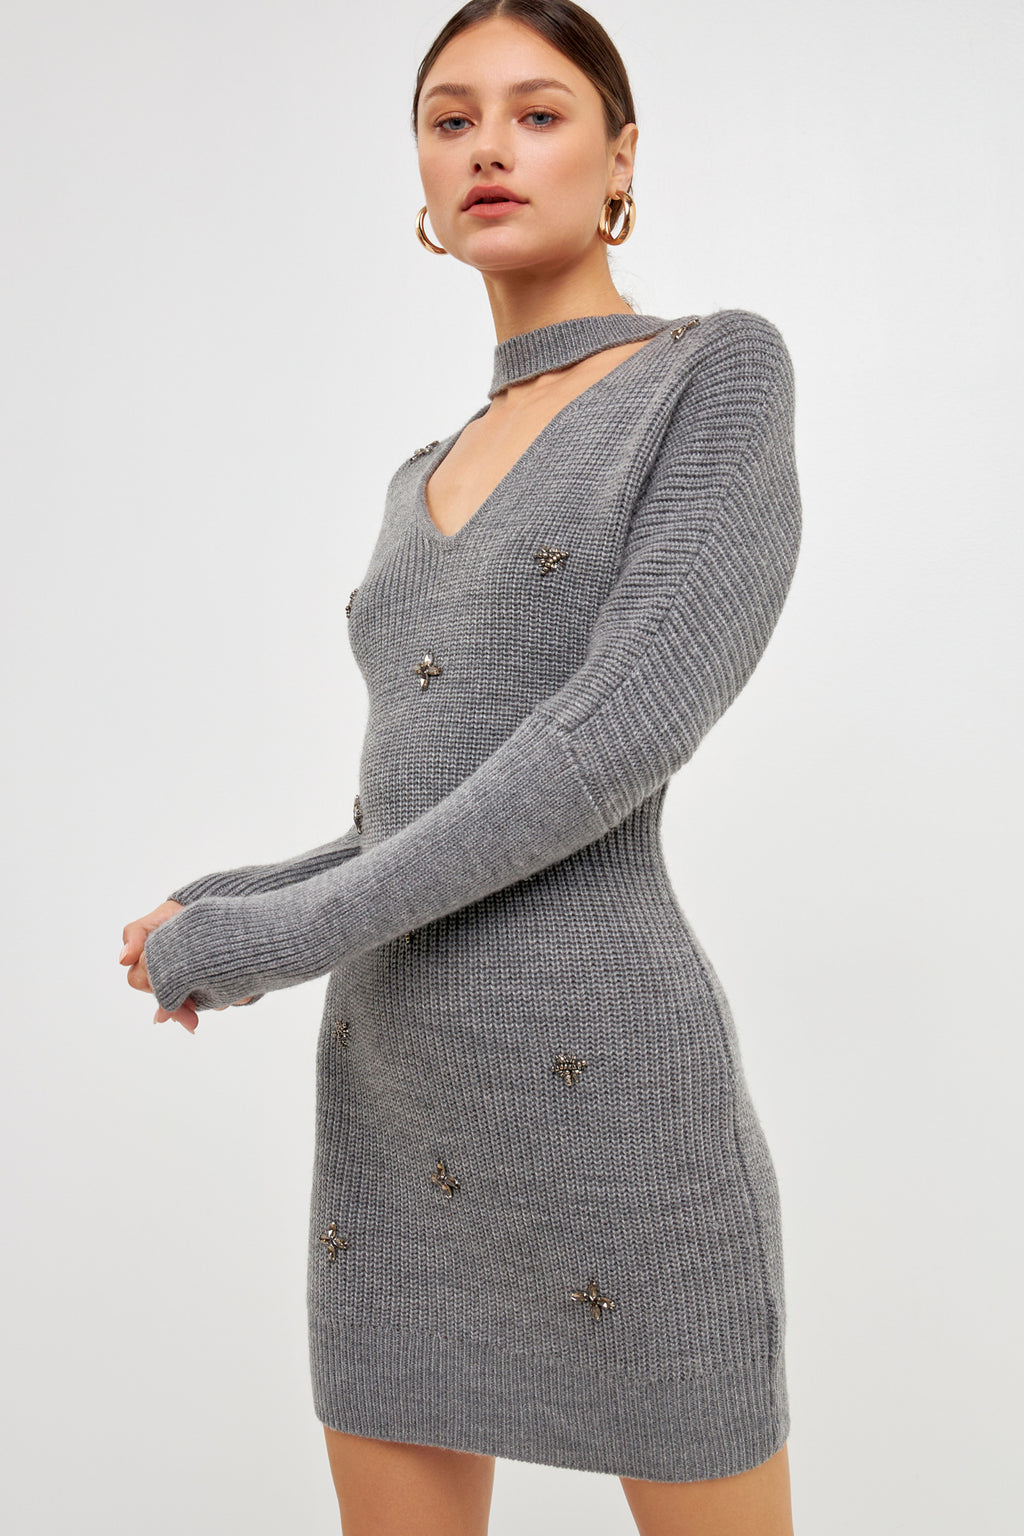 Embellished Sweater Dress